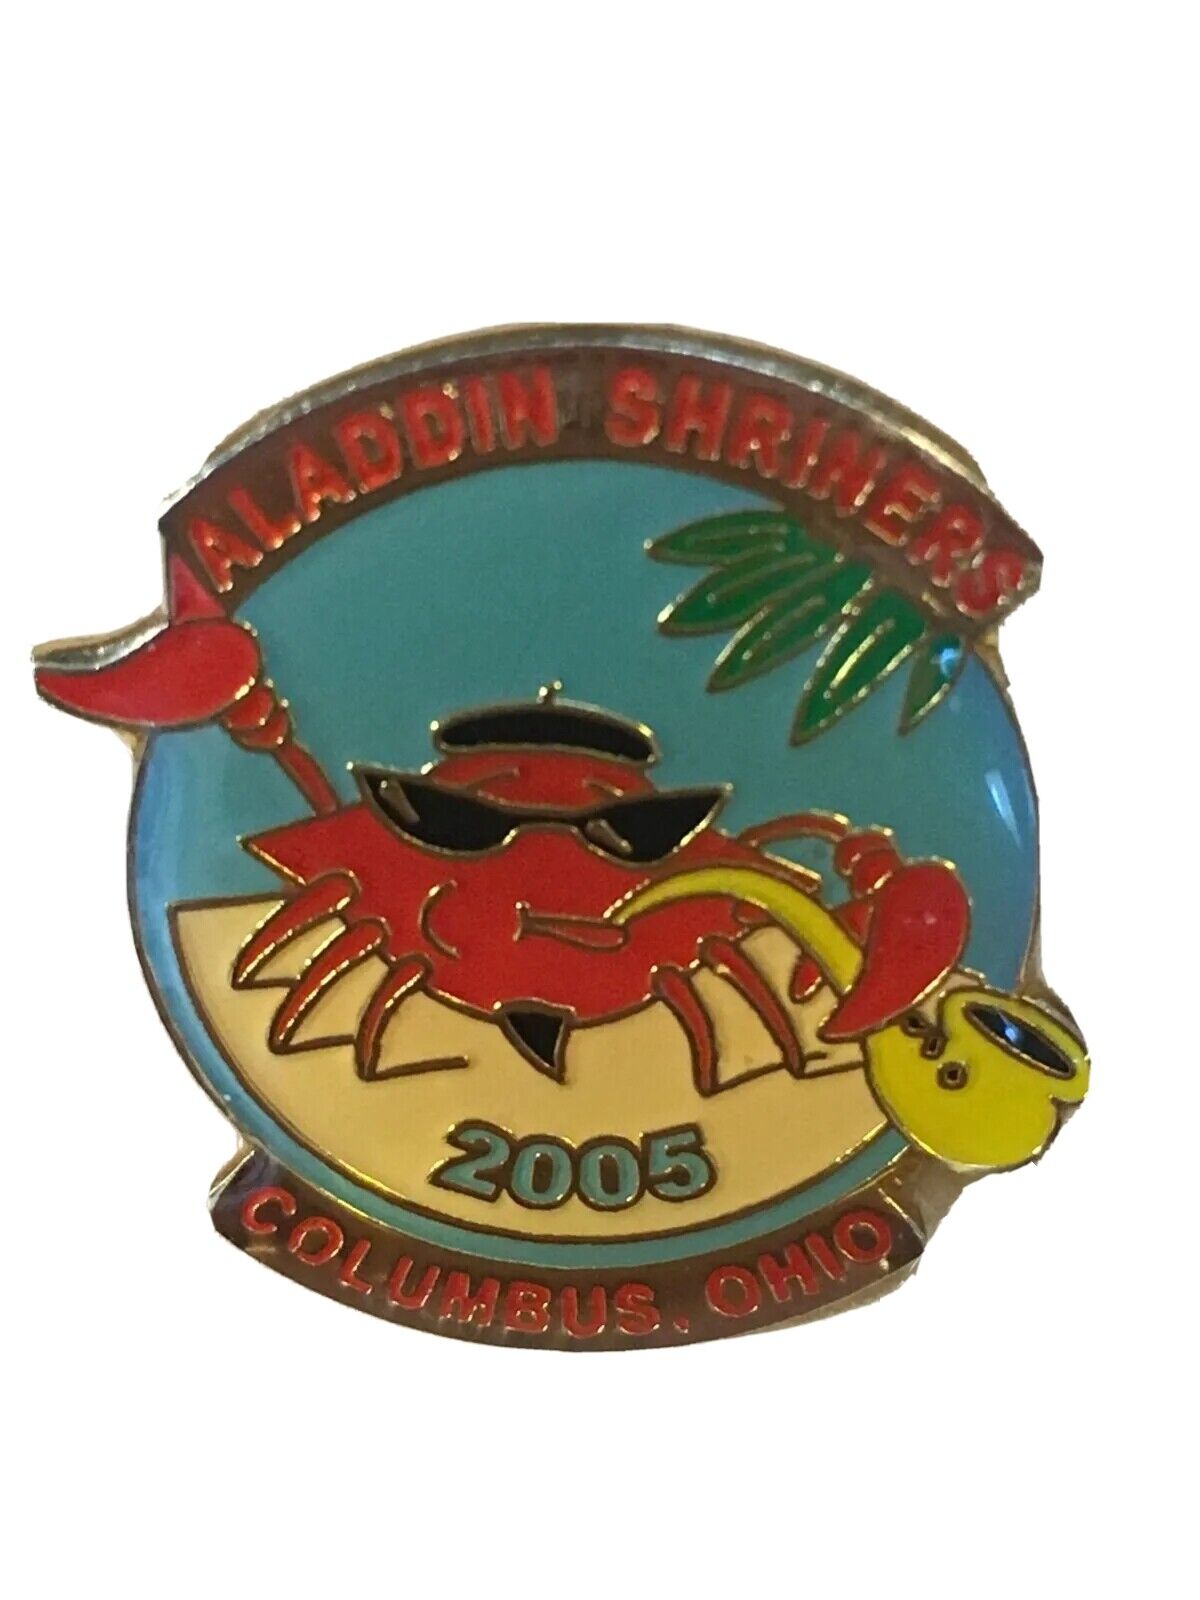 2005 Aladdin Shriners Columbus Ohio Lapel Pin Vintage Pinback  